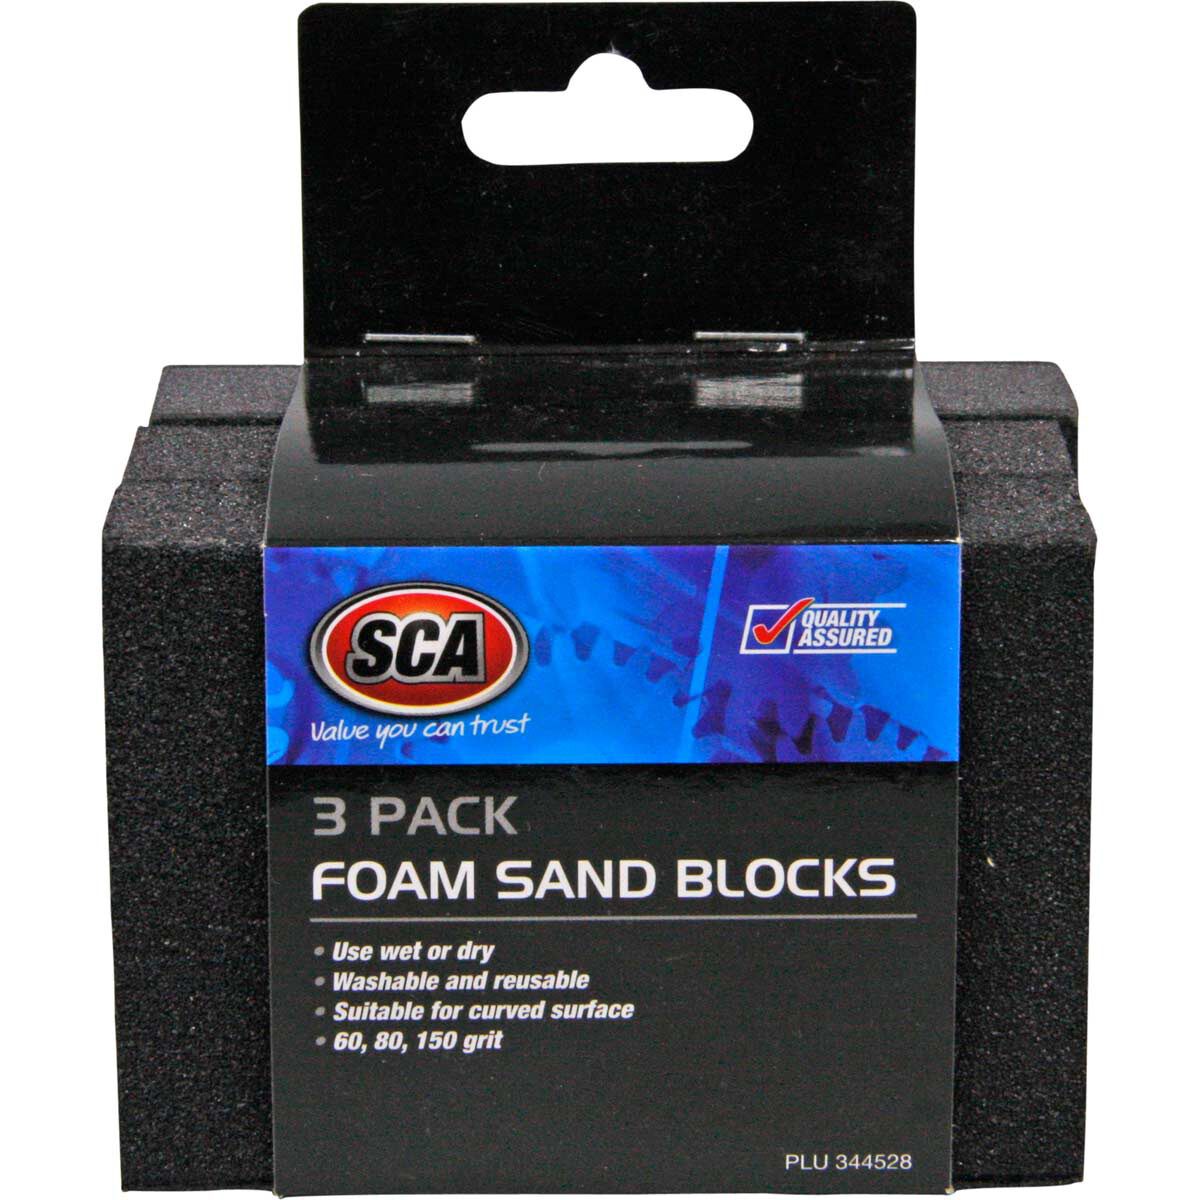 SCA Foam Sand Blocks - 3 Pack, , scaau_hi-res